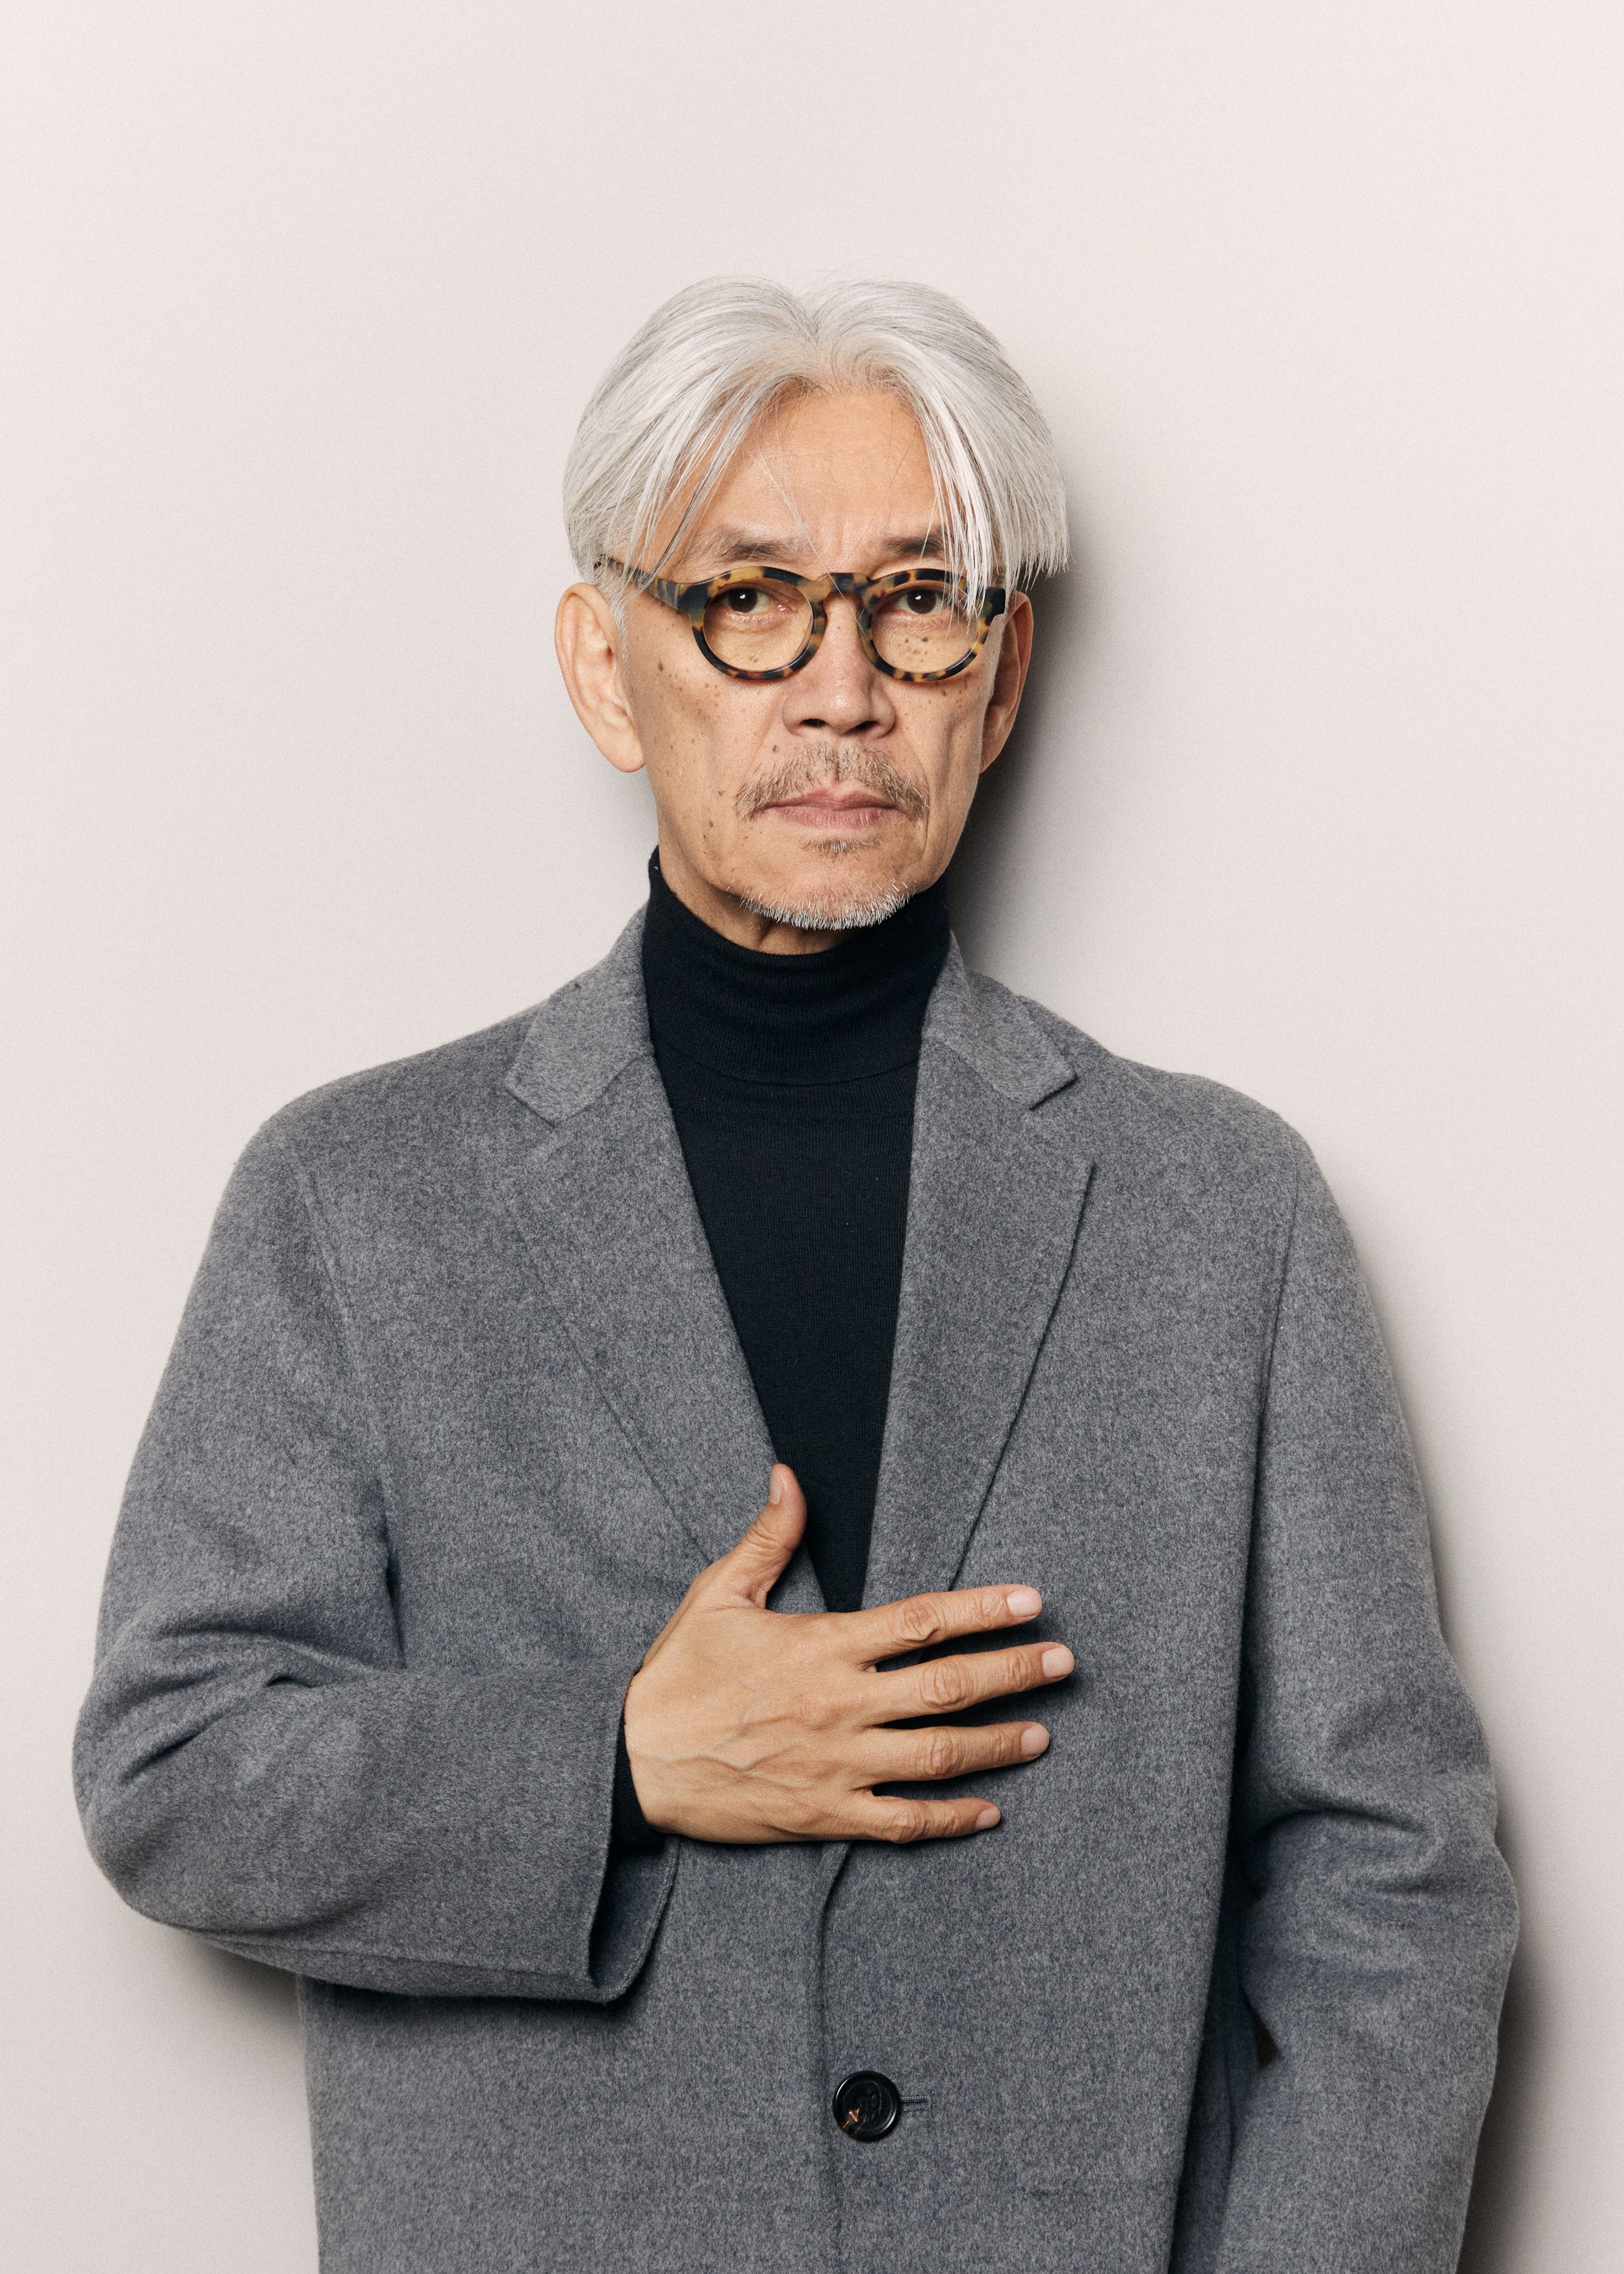 Ryuichi Sakamoto for WIRED Japan